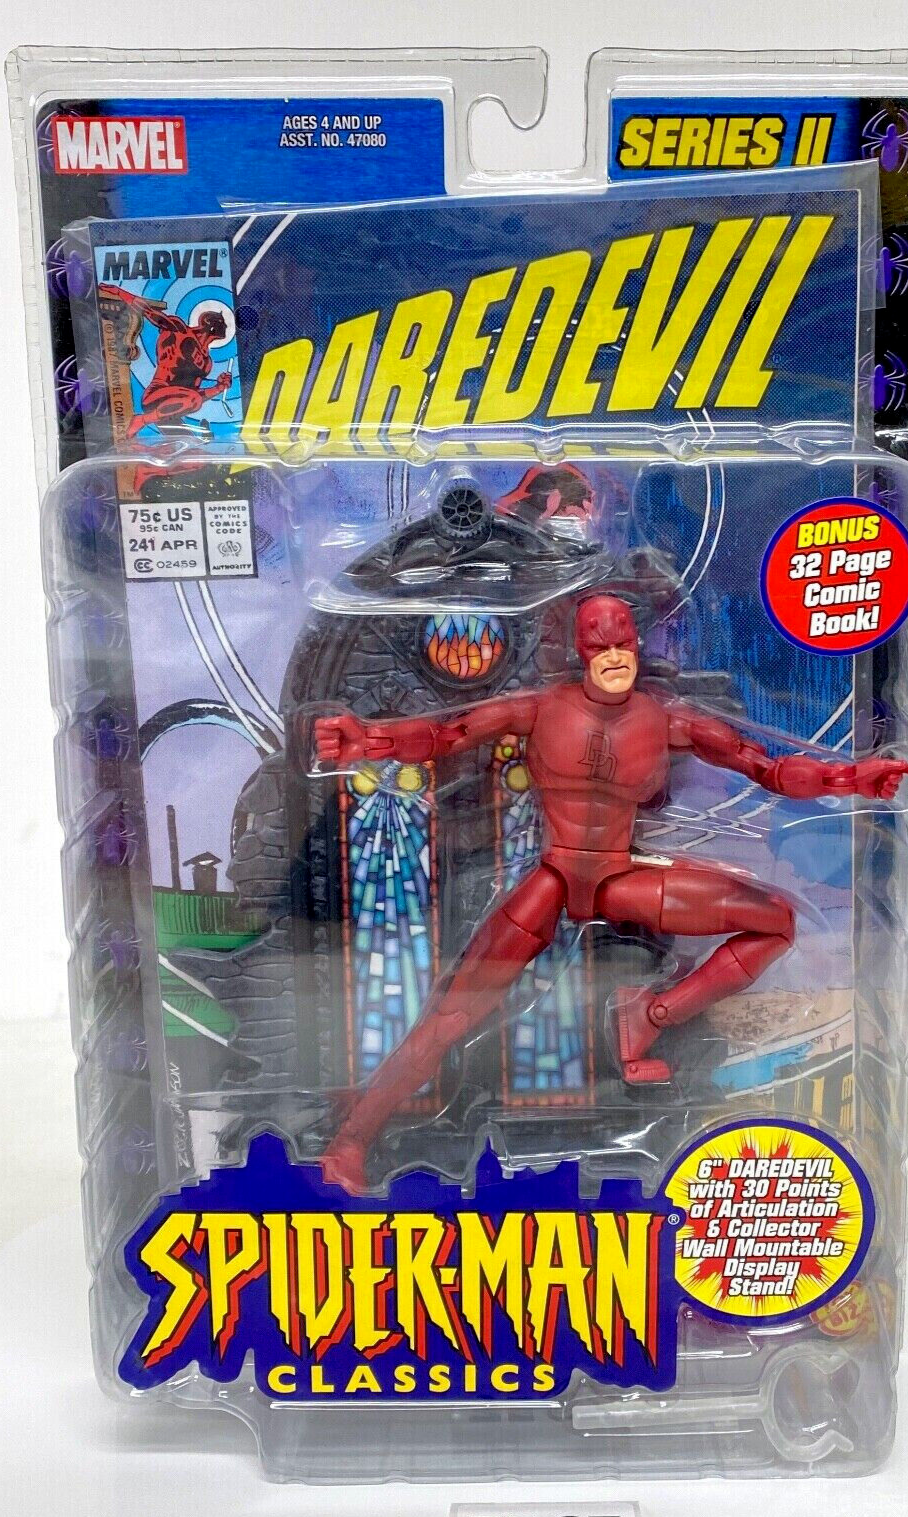 Marvel Legends Spider-Man Classics Series II DAREDEVIL Toybiz 2002, Unopened - $35.94